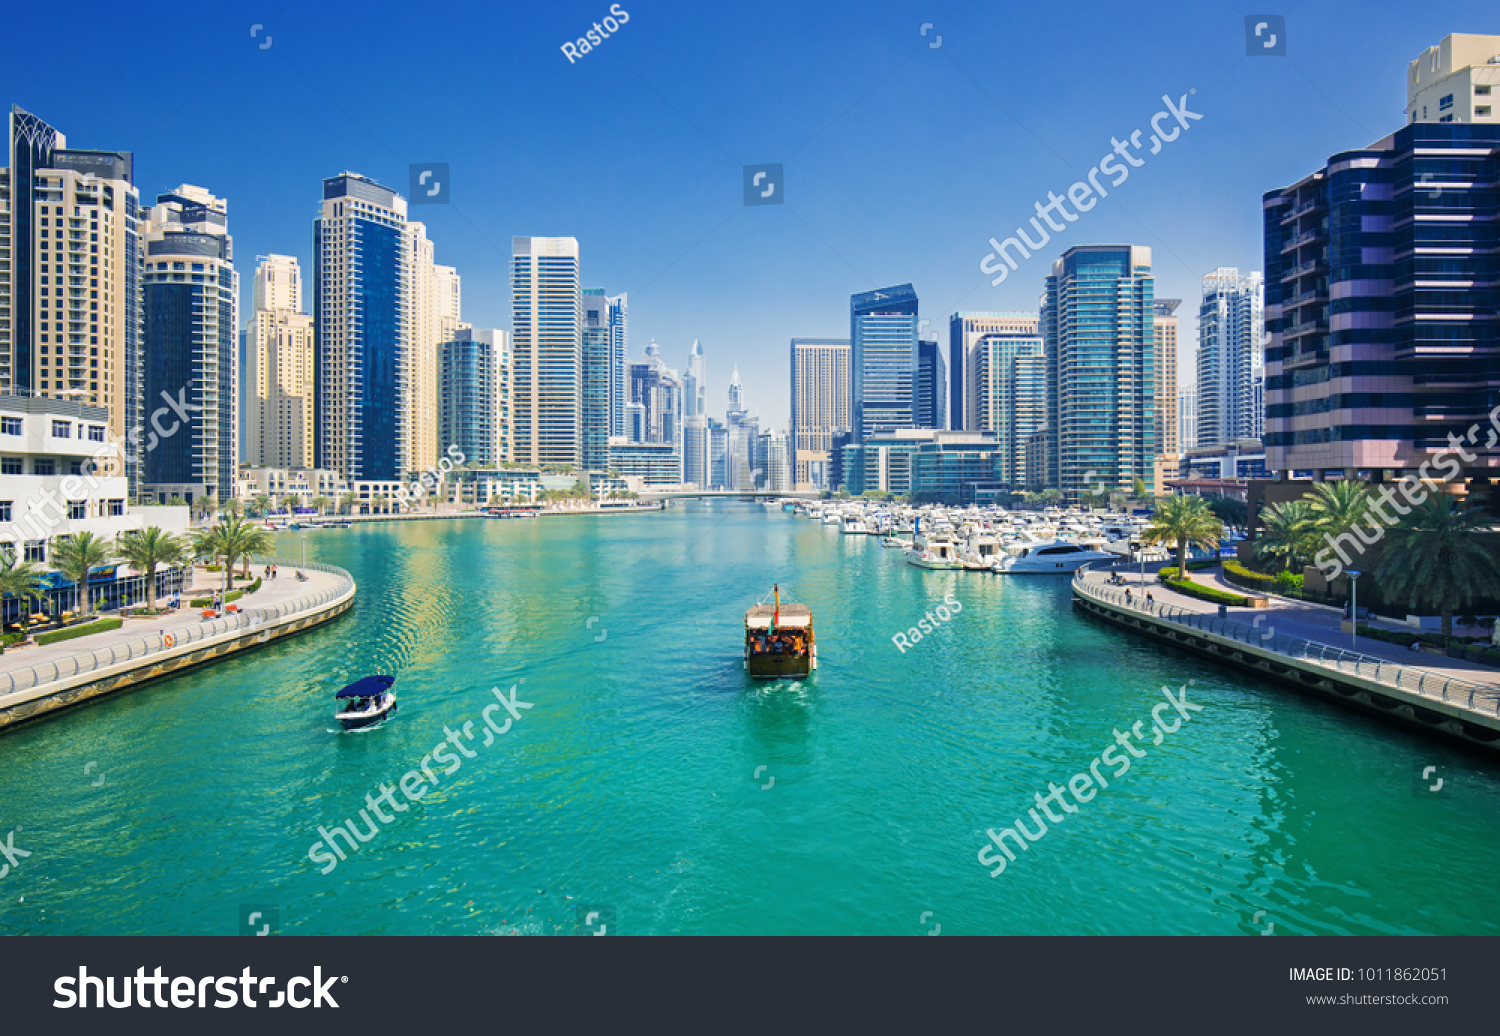  Dubai Marina skyscrapers, port with luxury yachts and Marina promenade, Dubai, United Arab Emirates #1011862051